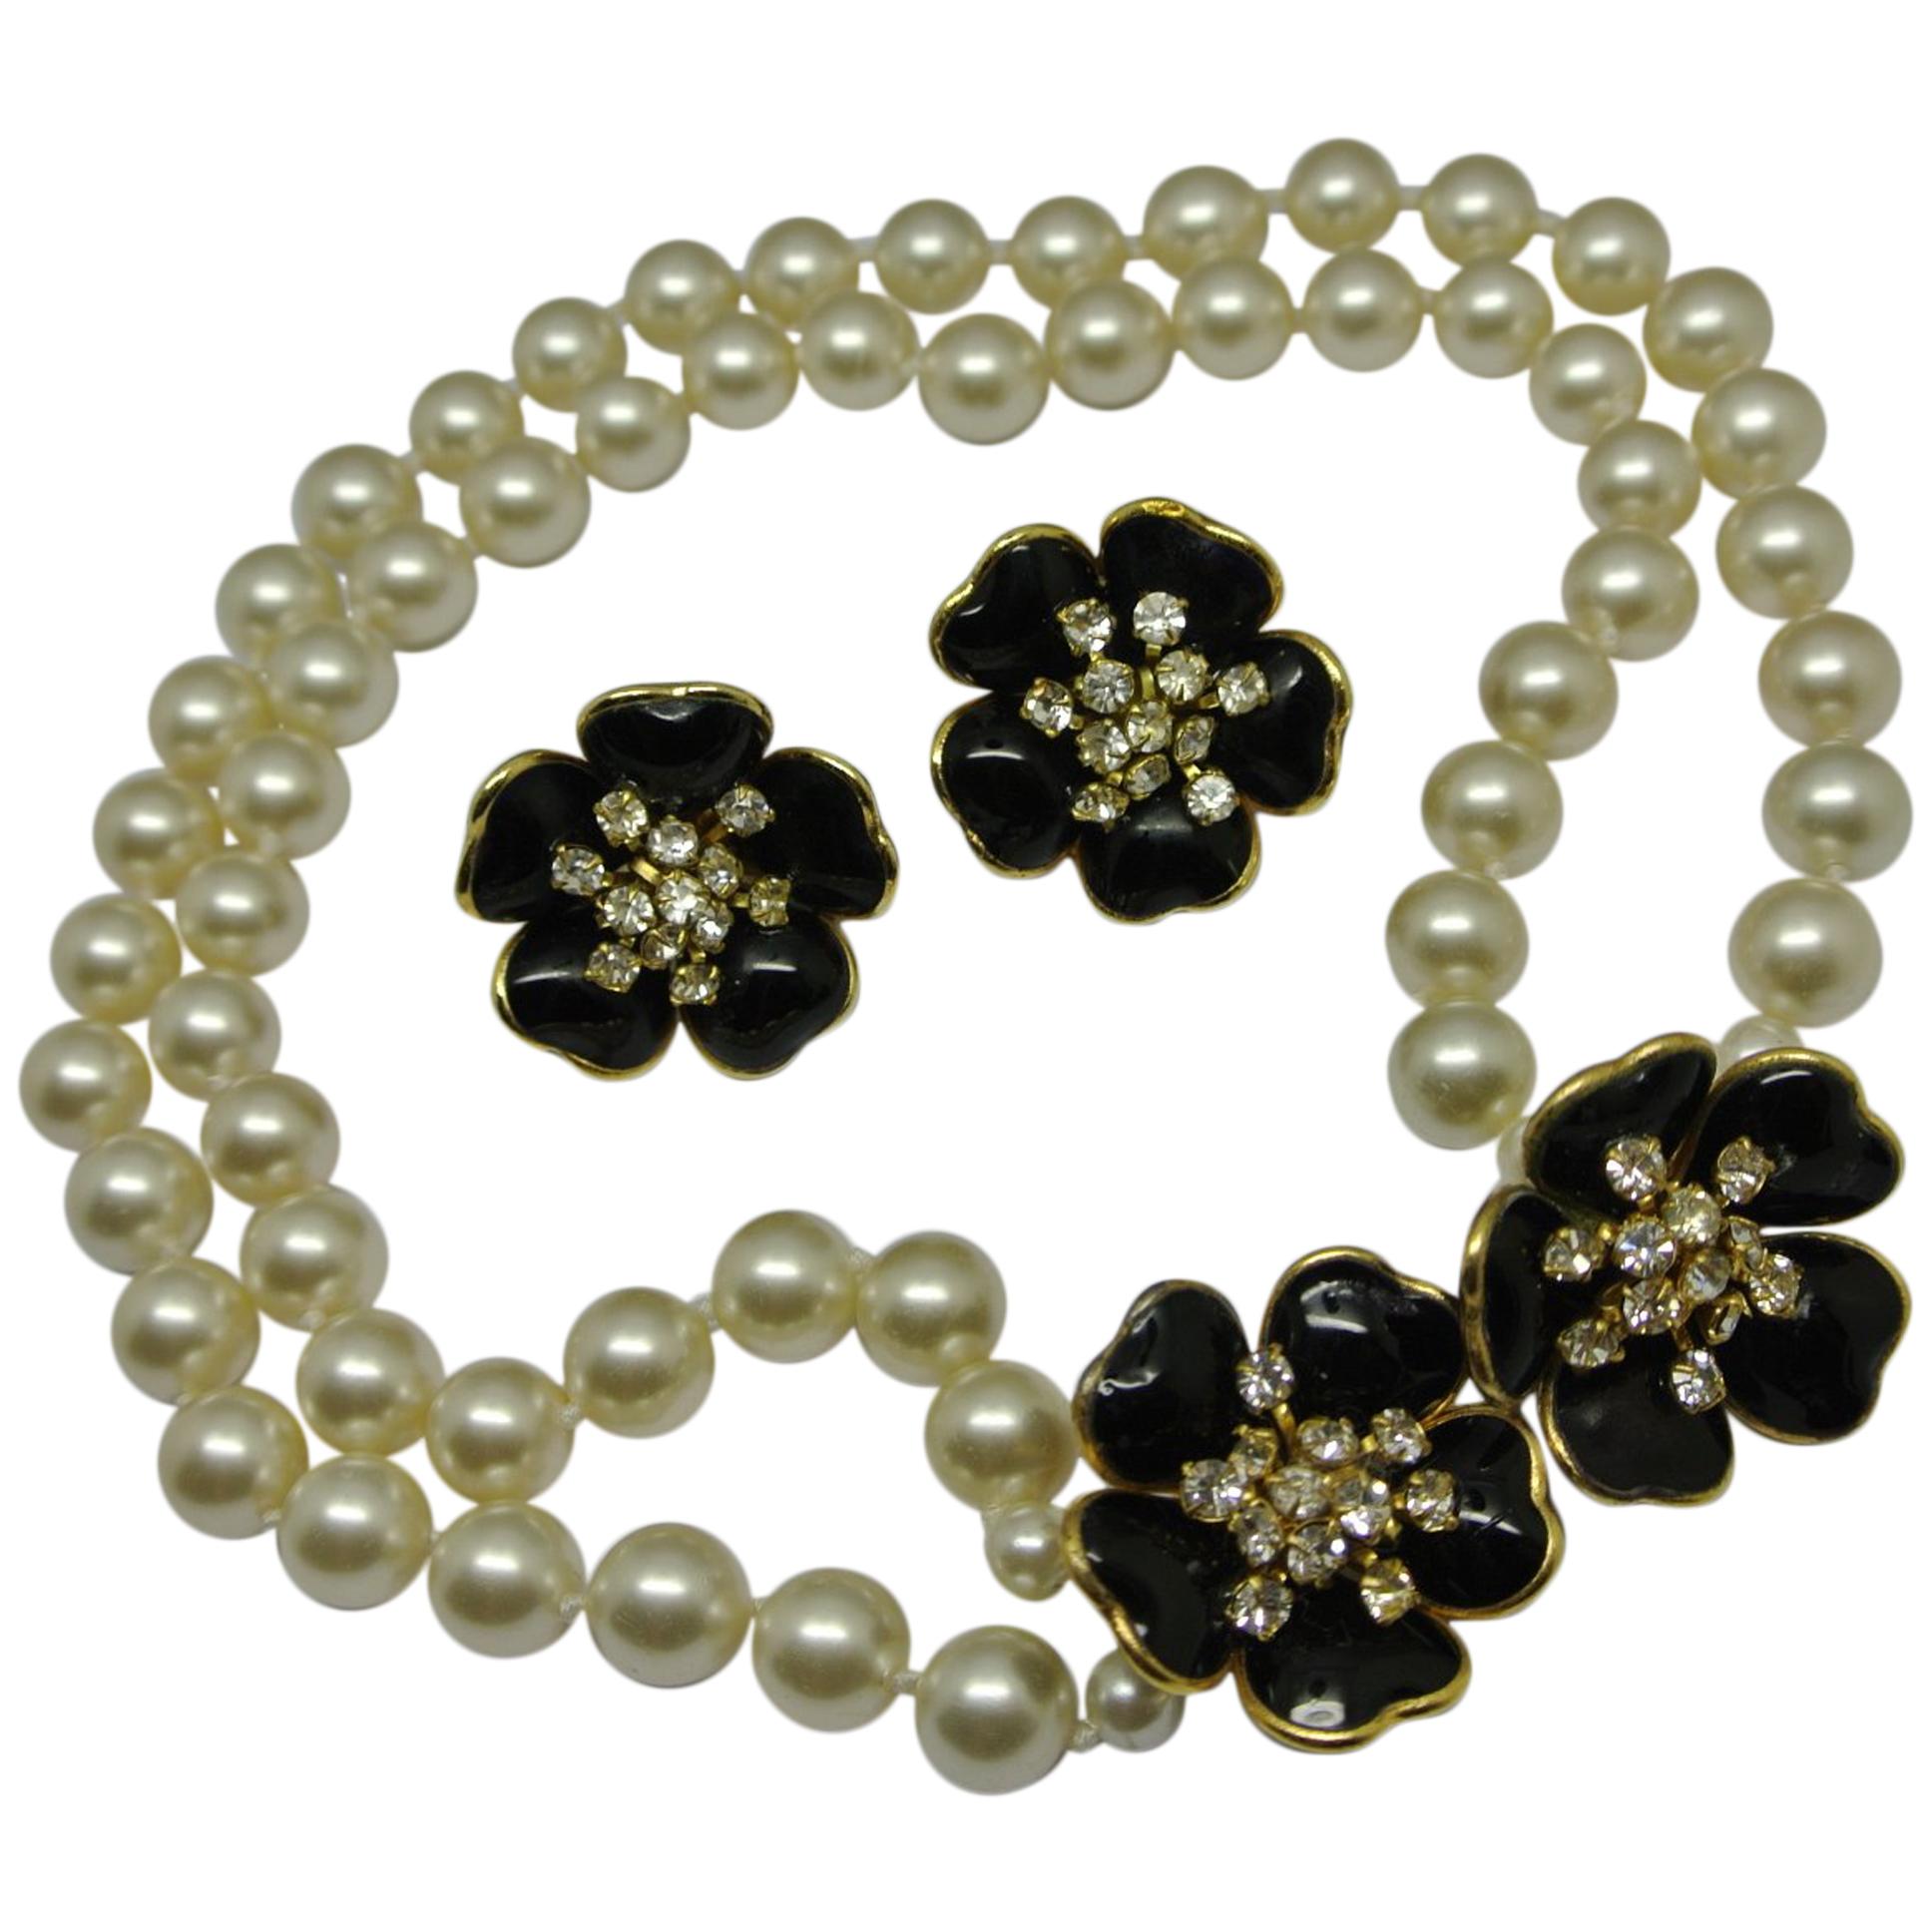 Chanel Unsigned 1950s Gripoix Black Flower Faux Pearl Necklace Choker Earrings For Sale